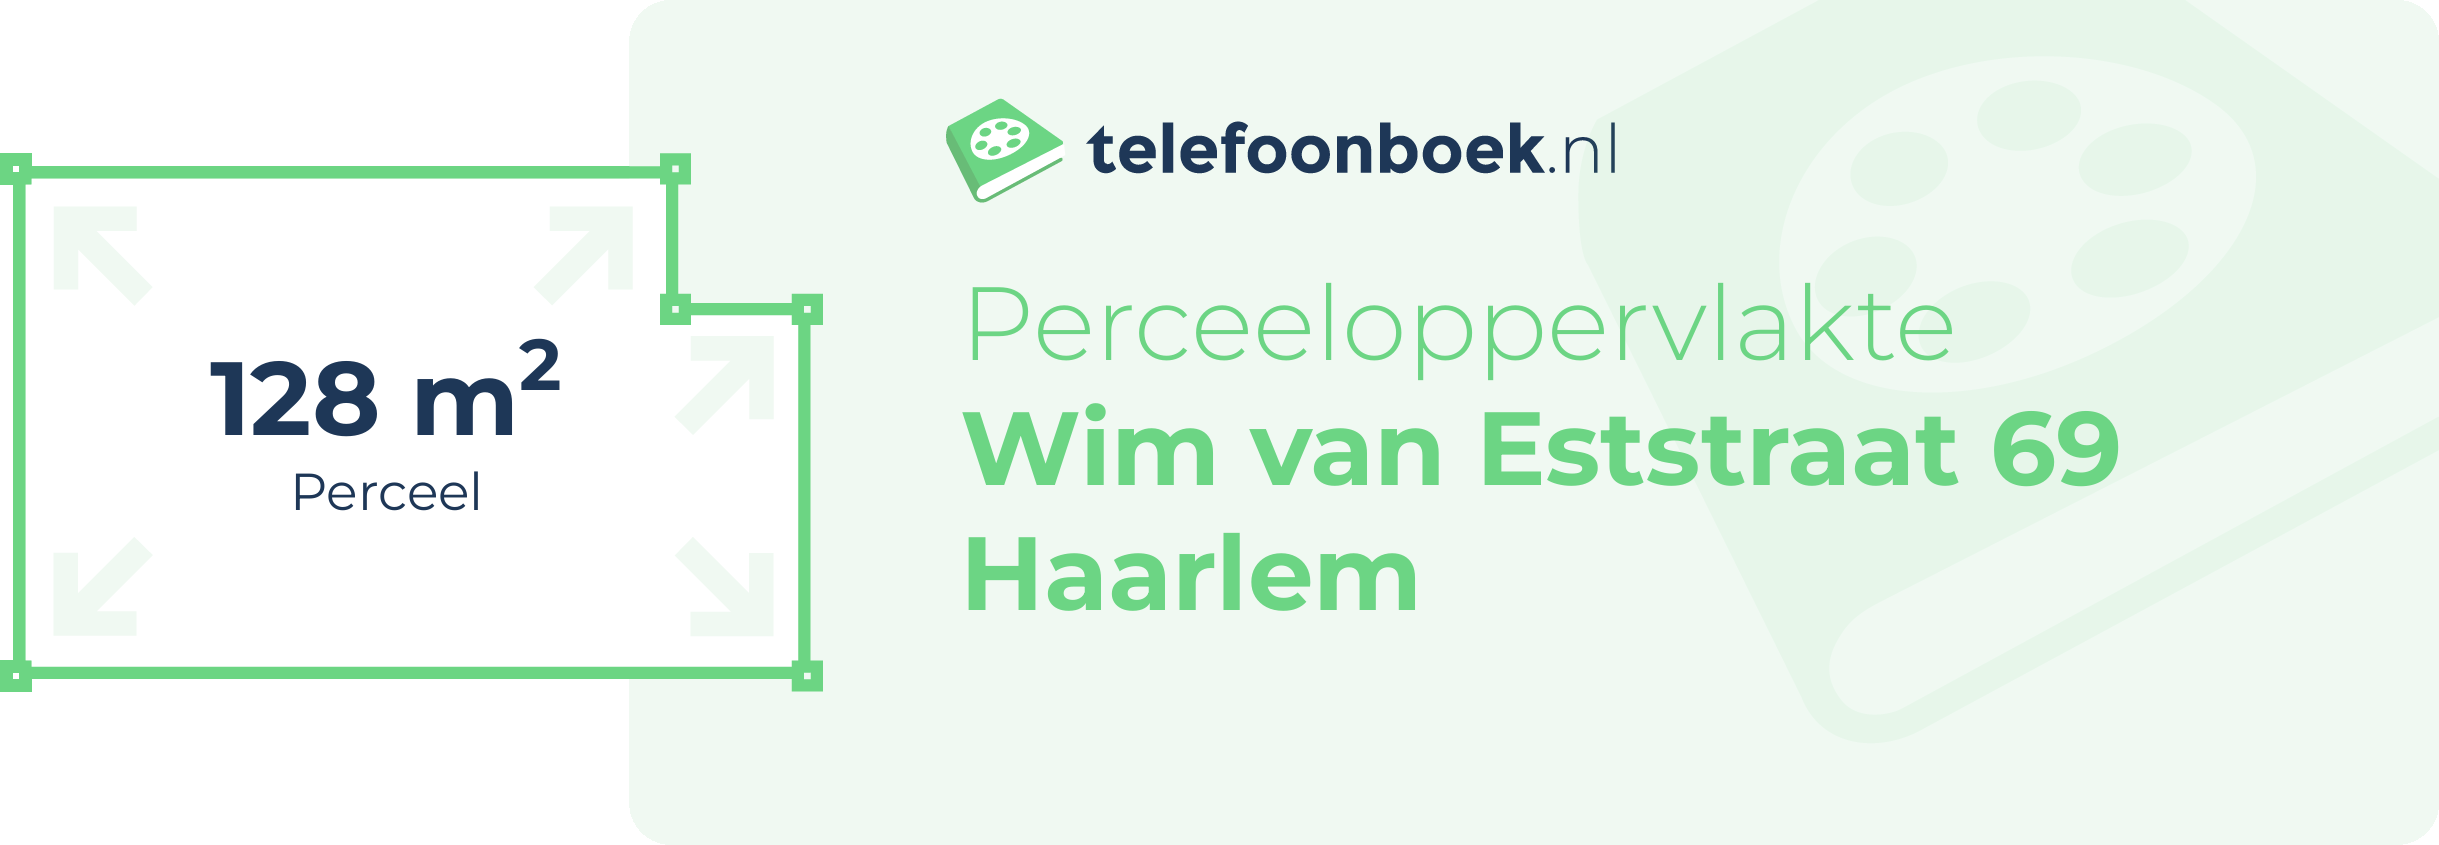 Perceeloppervlakte Wim Van Eststraat 69 Haarlem